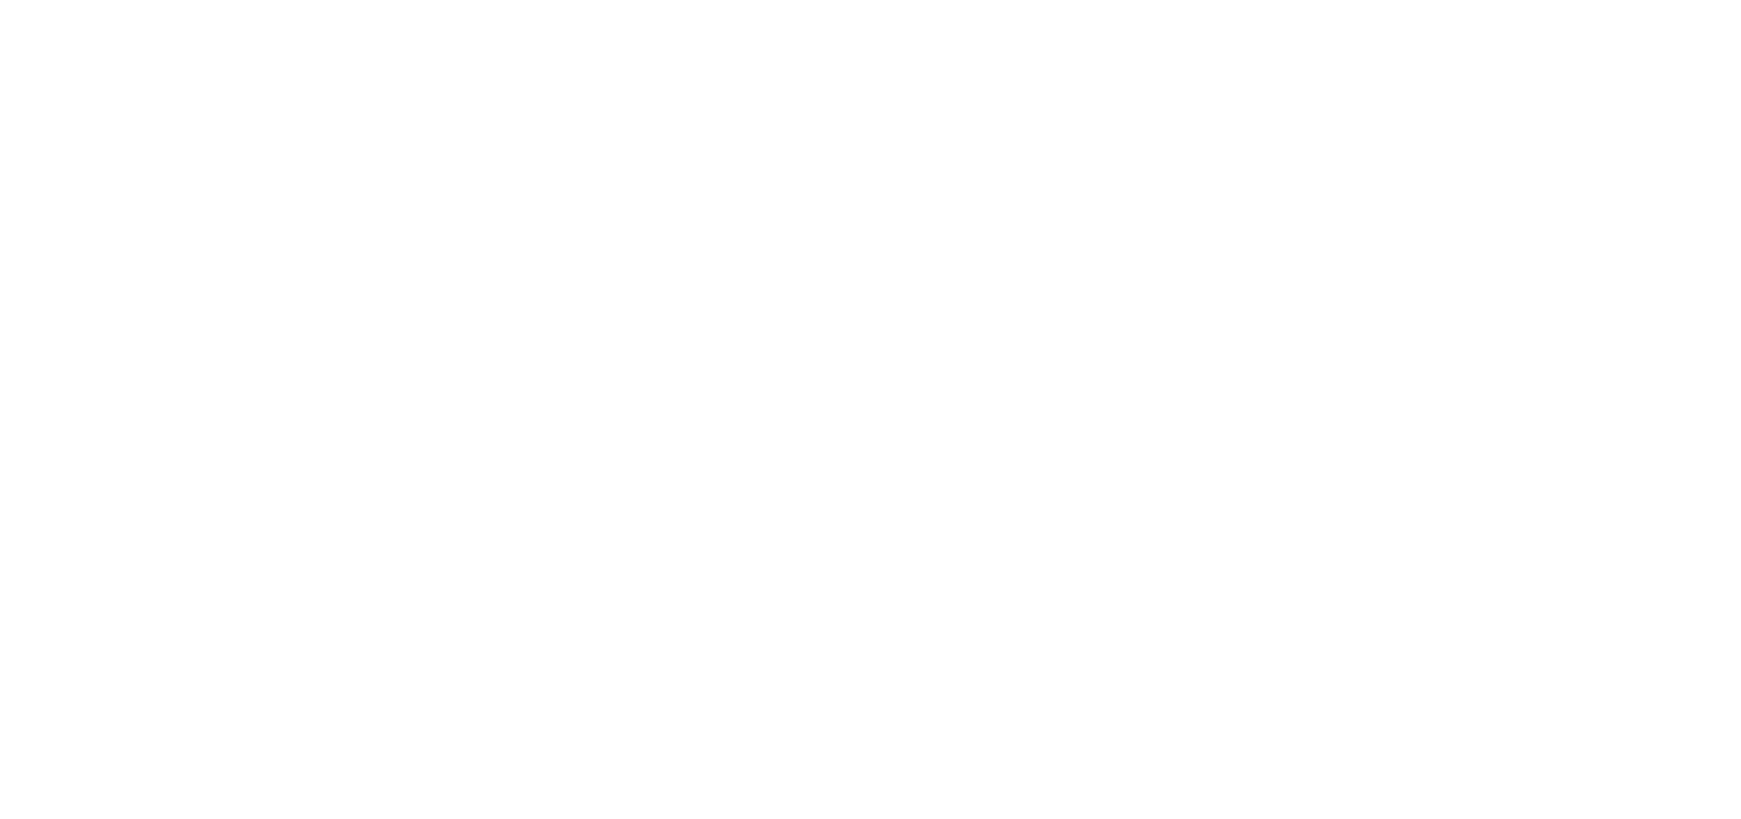 Please Baby Please logo